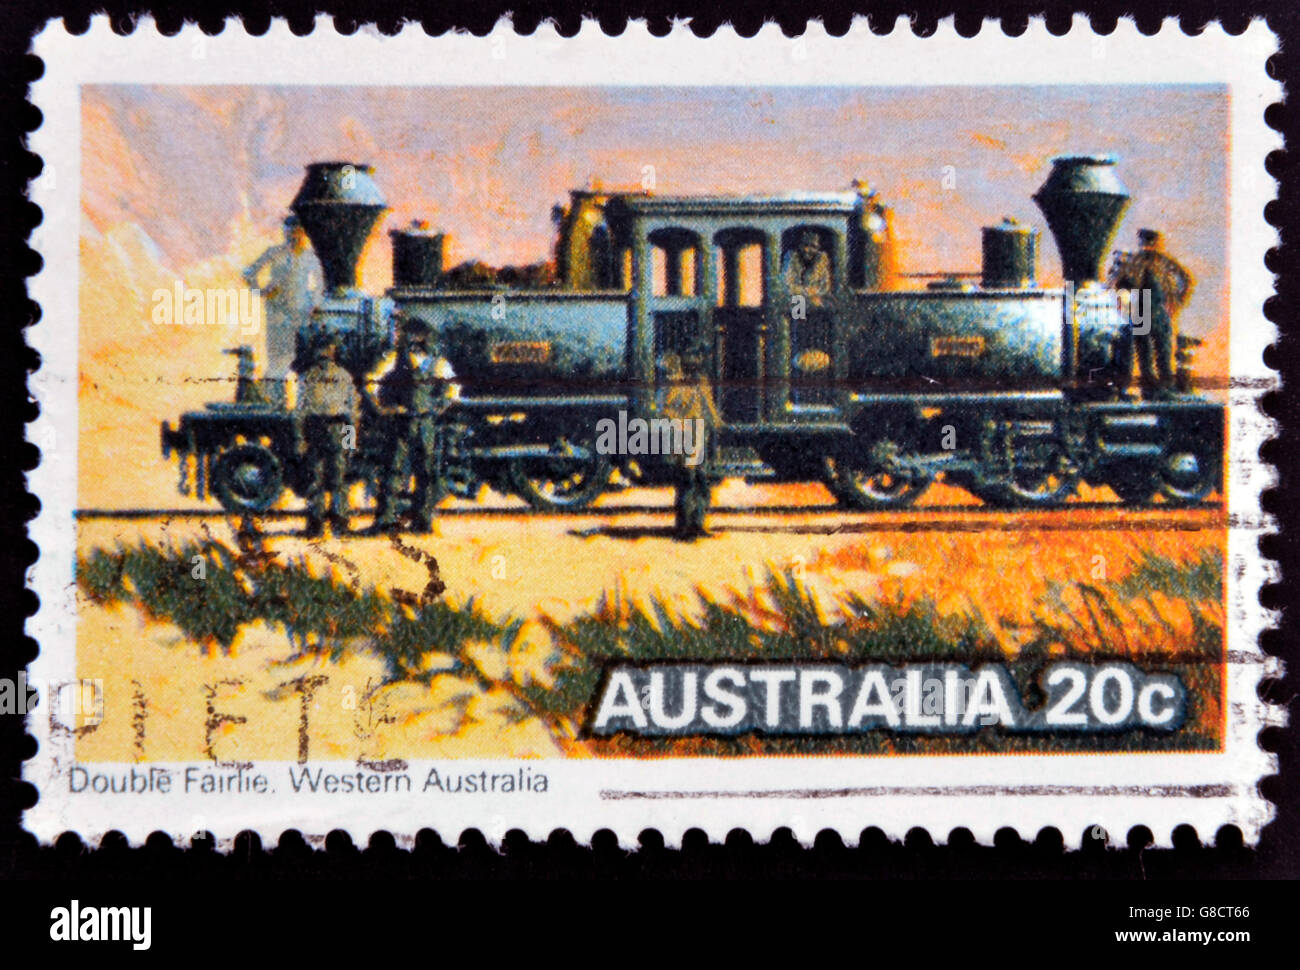 AUSTRALIA - CIRCA 1979: A stamp from Australia shows image of the the Australian steam locomotive Double Fairlie, circa 1979 Stock Photo